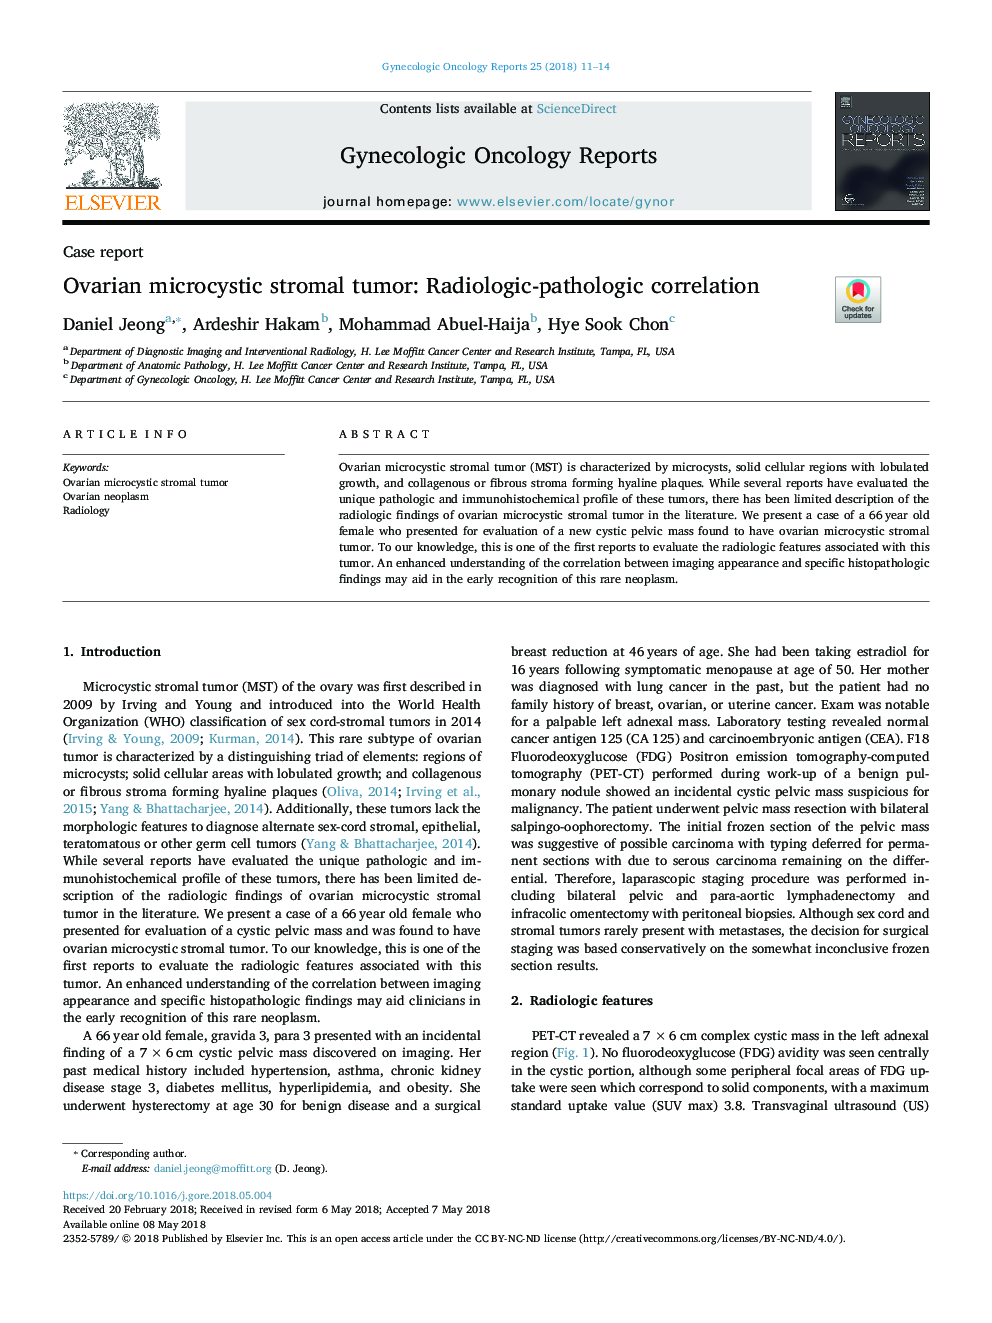 Ovarian microcystic stromal tumor: Radiologic-pathologic correlation